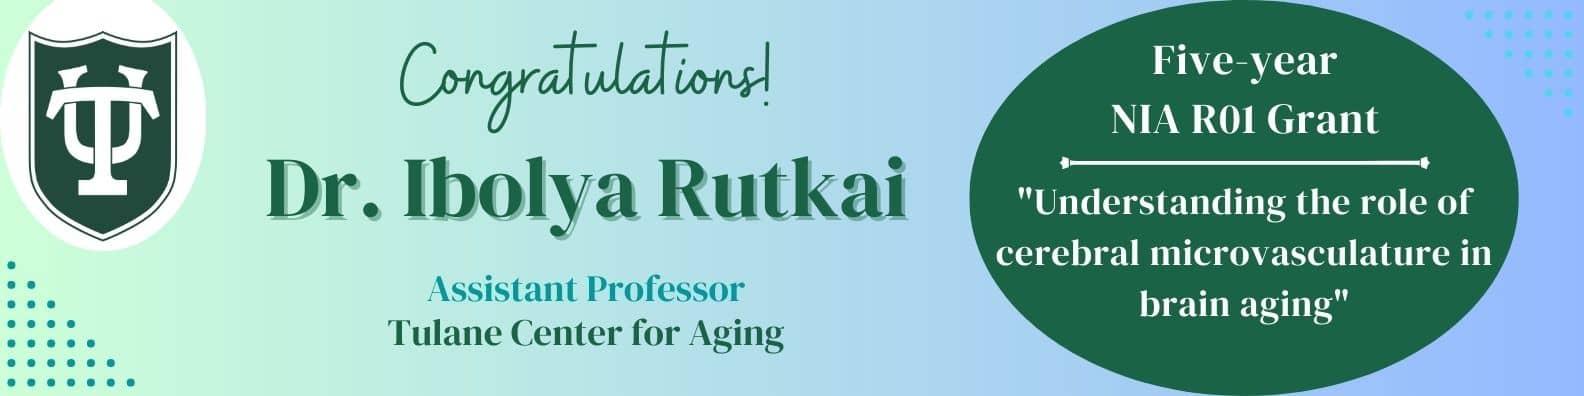 Congratulations to Dr. Rutkai